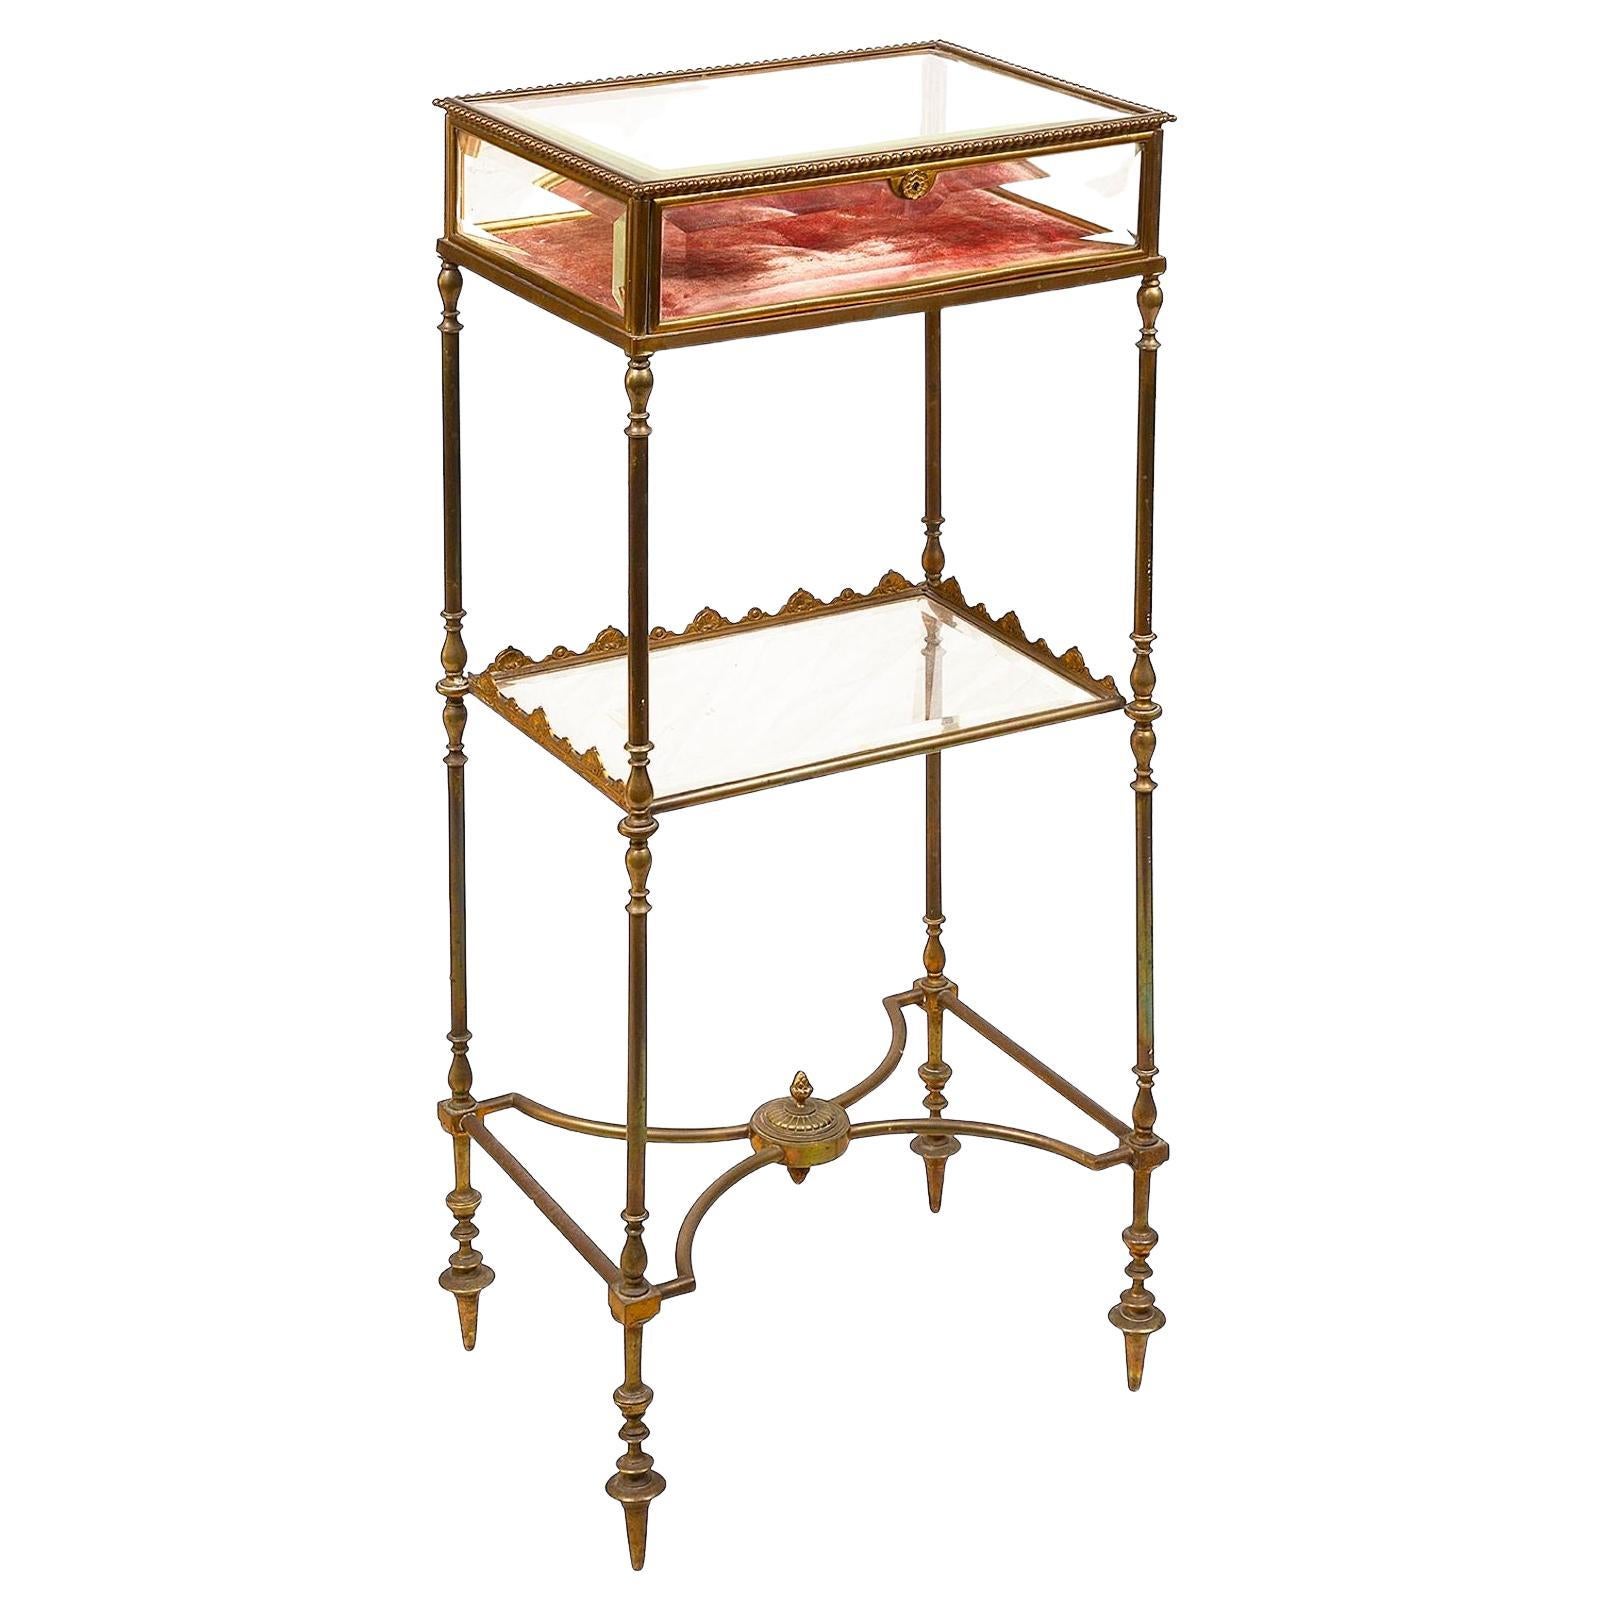 A French gilded ormolu bijouterie display table, circa 1890